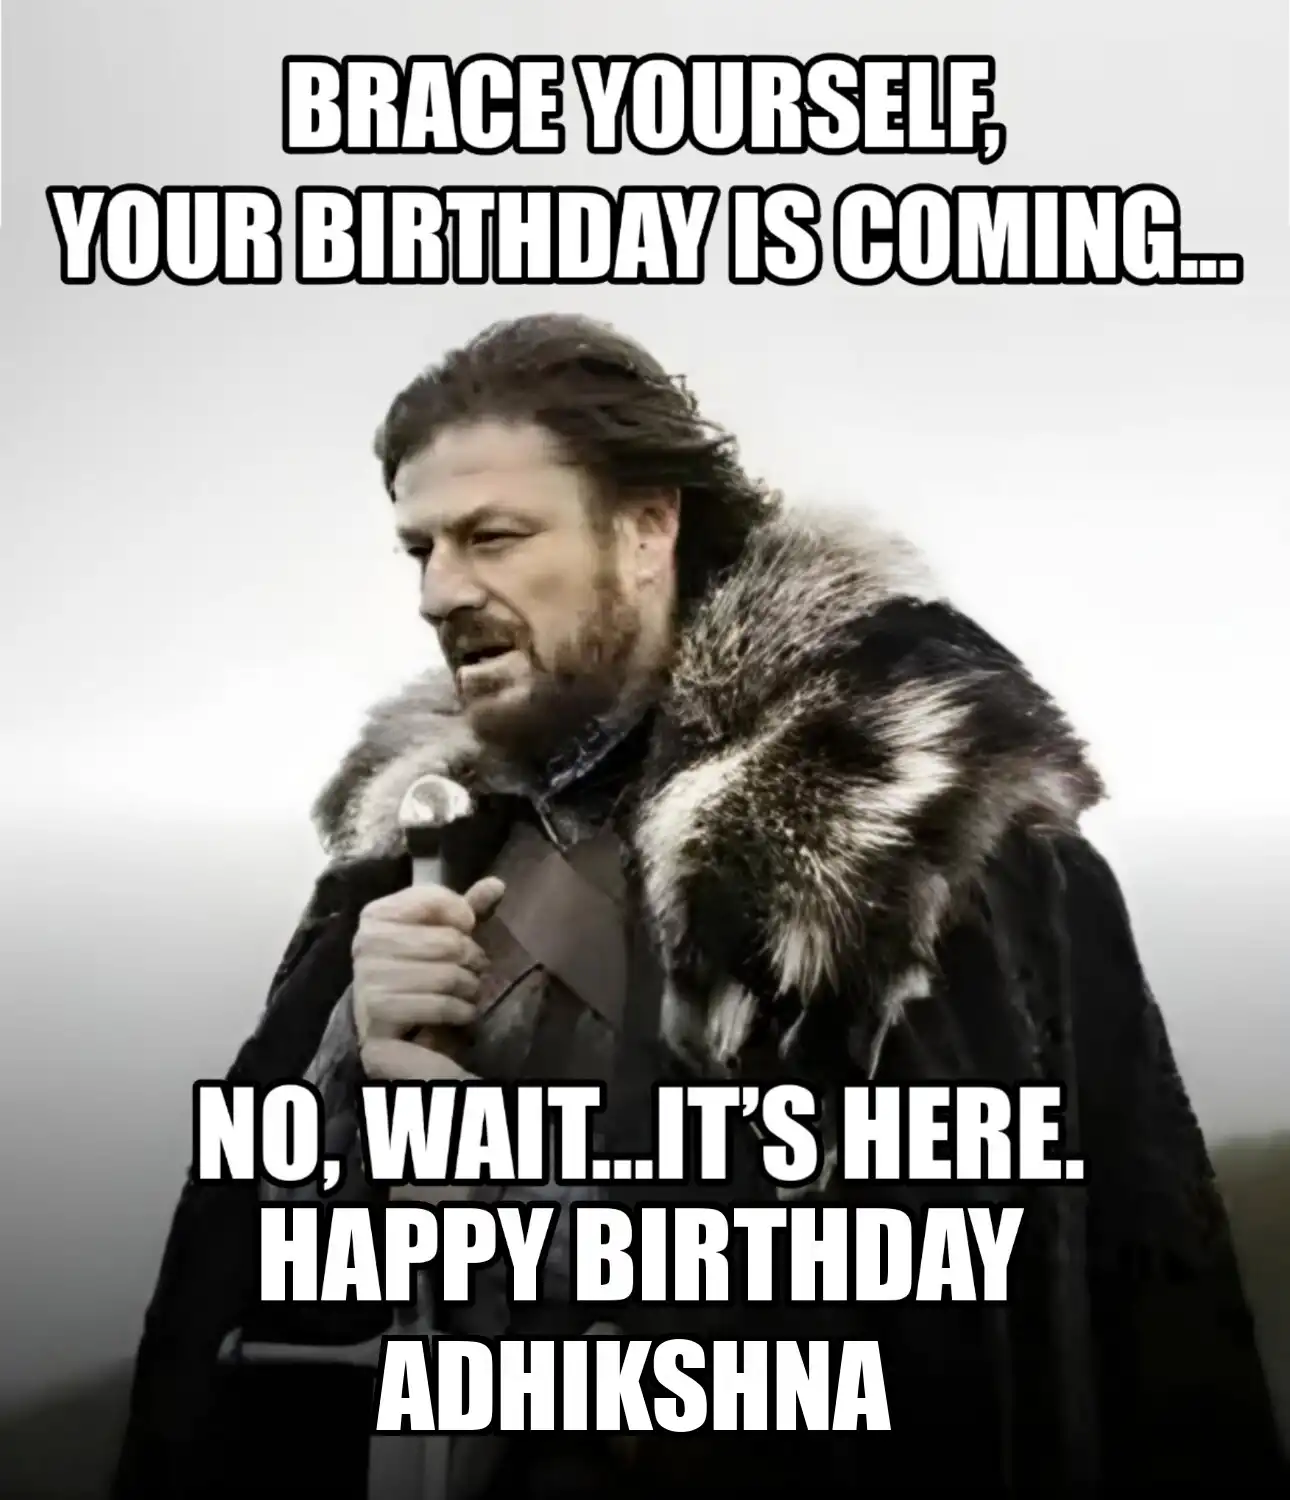 Happy Birthday Adhikshna Brace Yourself Your Birthday Is Coming Meme